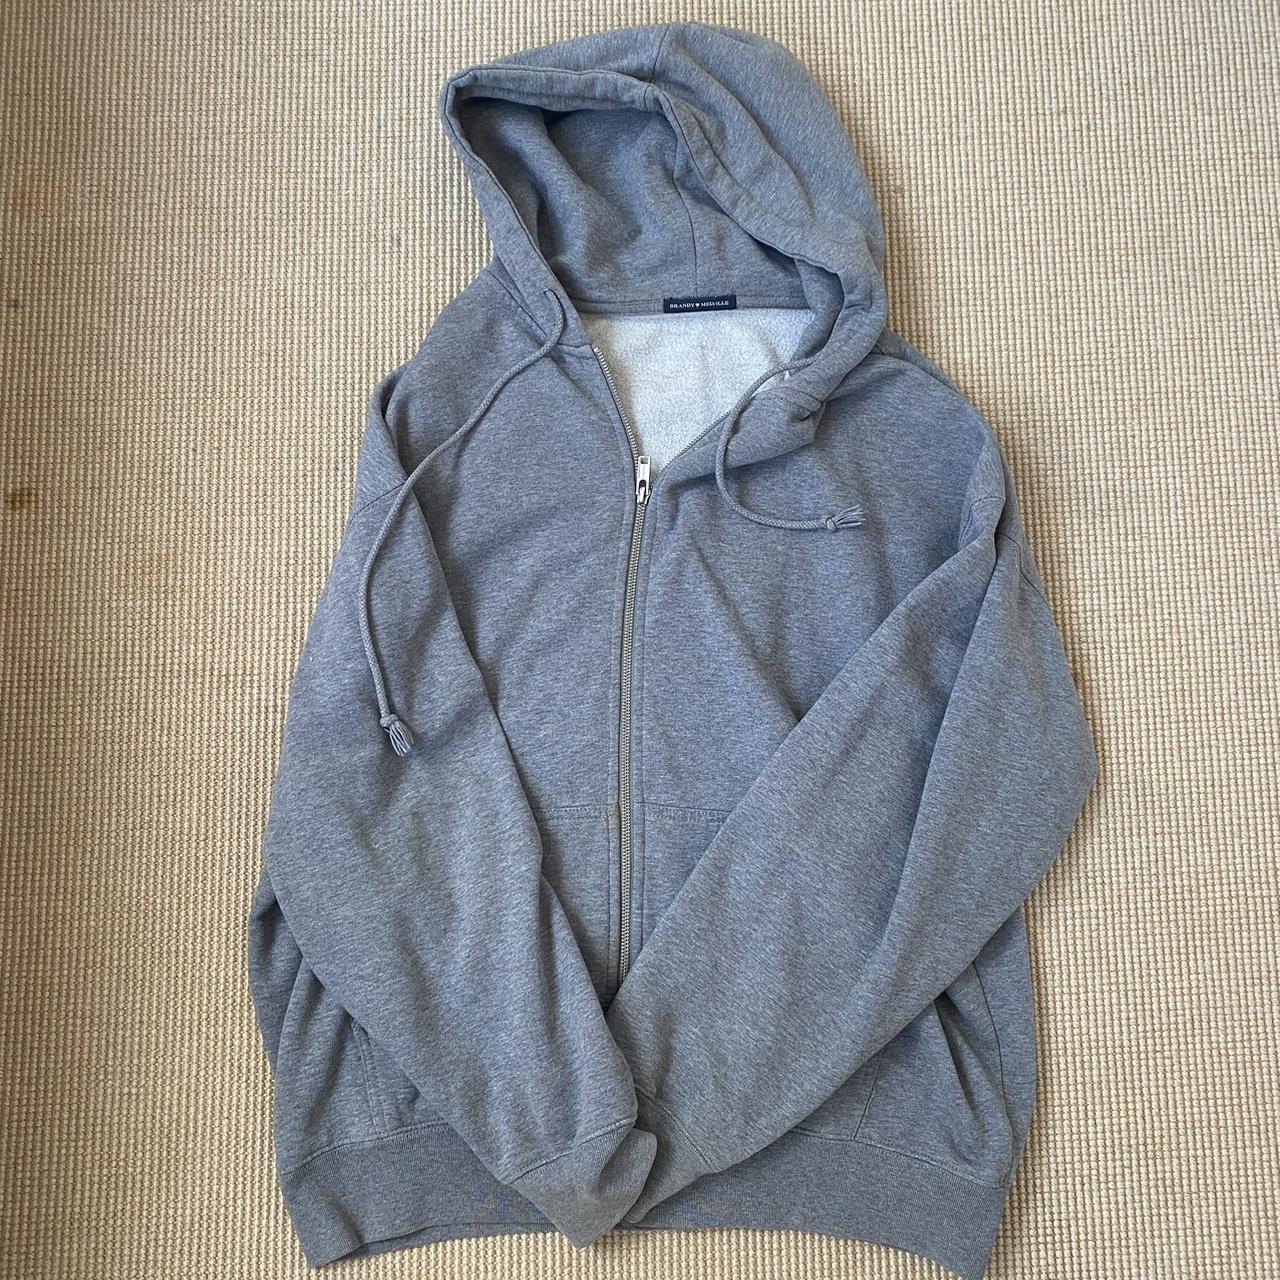 Brandy Melville oversized grey zip up hoodie. Very... - Depop